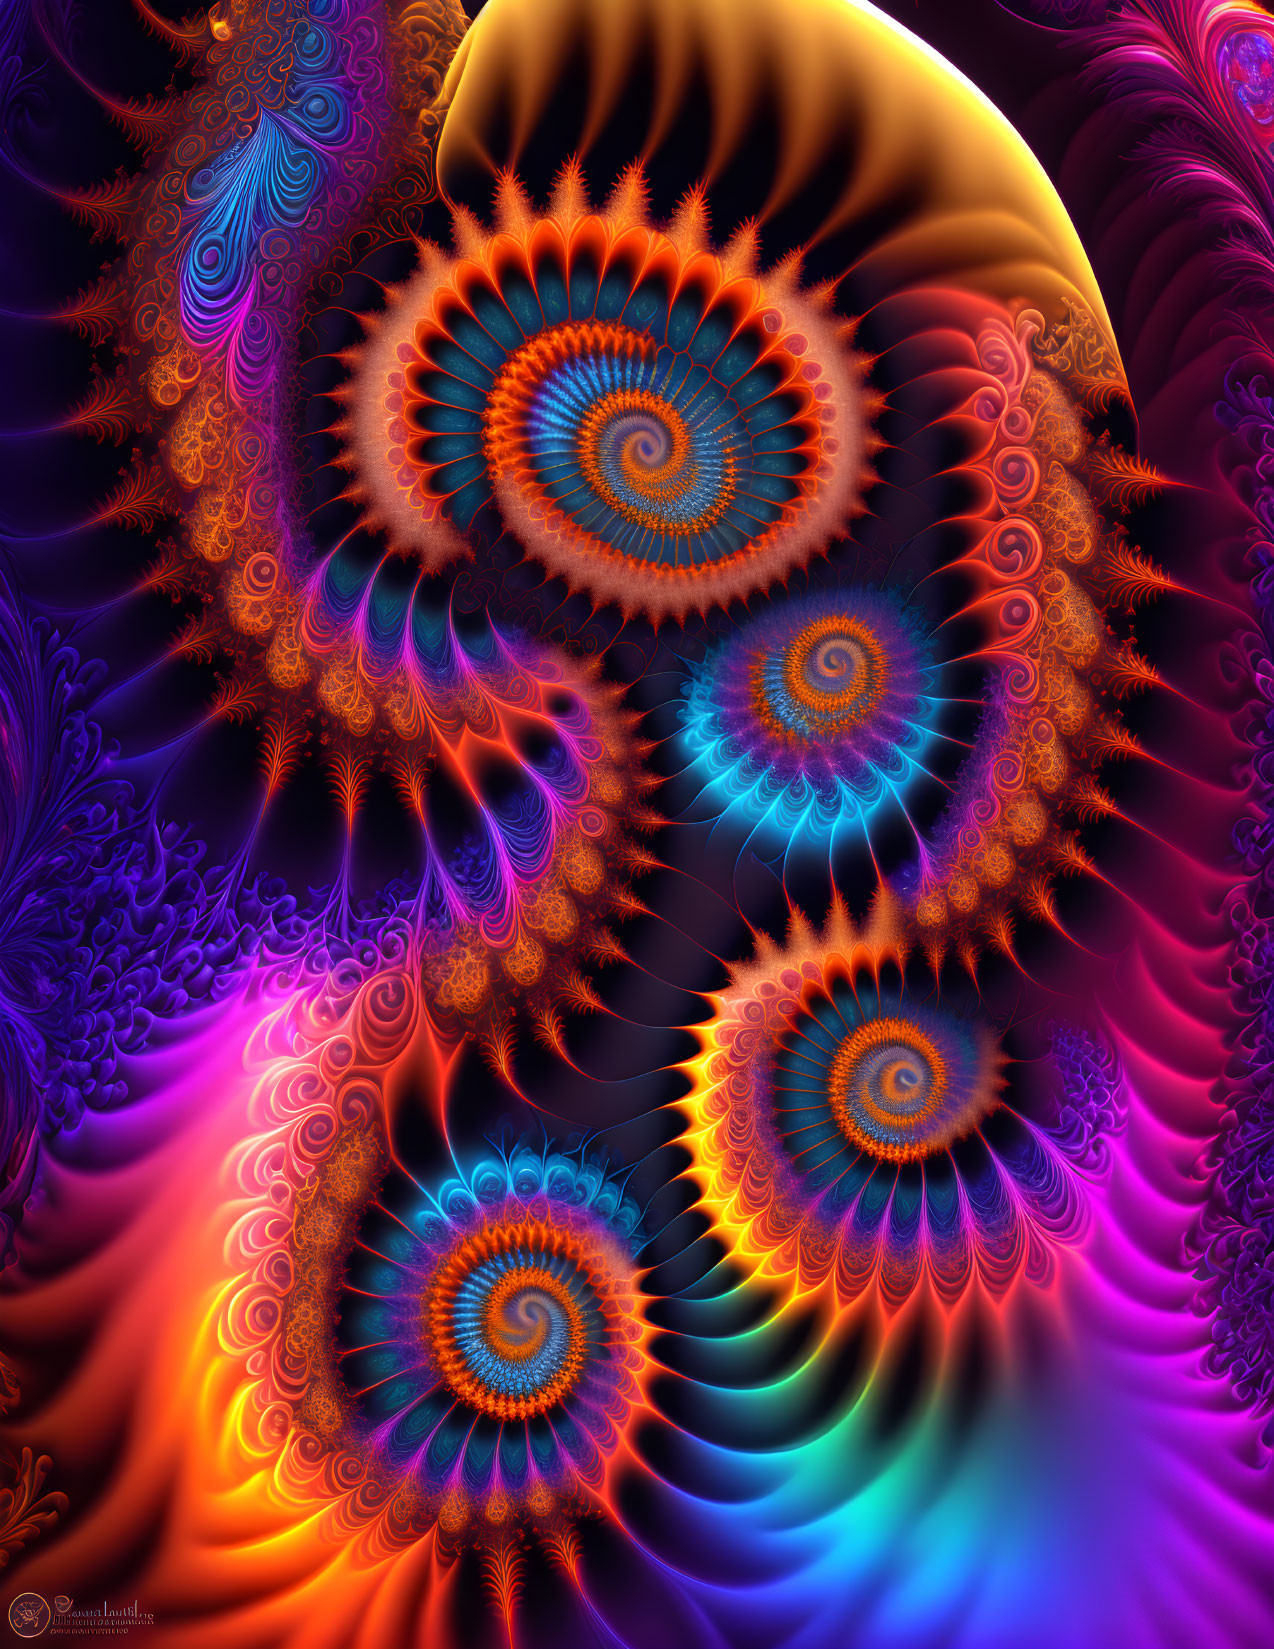 Colorful swirling fractal art in orange, blue, and purple hues